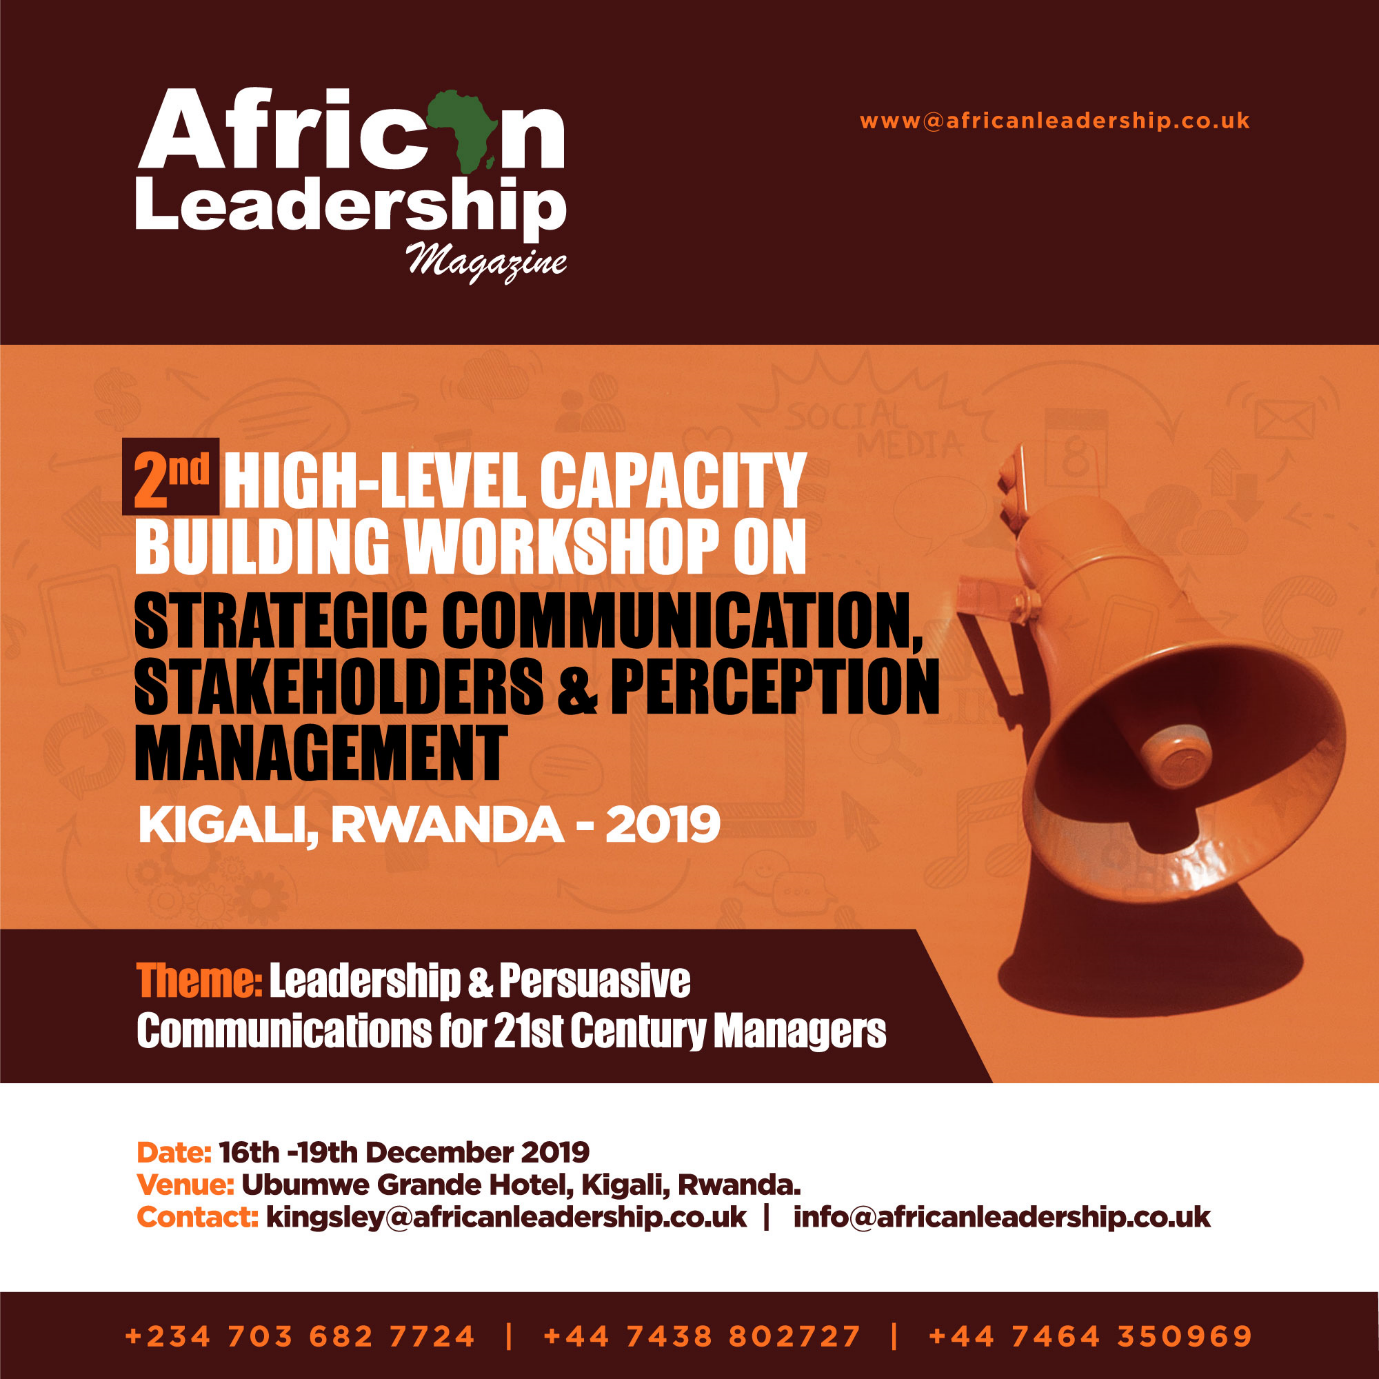 2nd High-level Capacity Building Workshop on Strategic Communication, Stakeholders & Perception Management